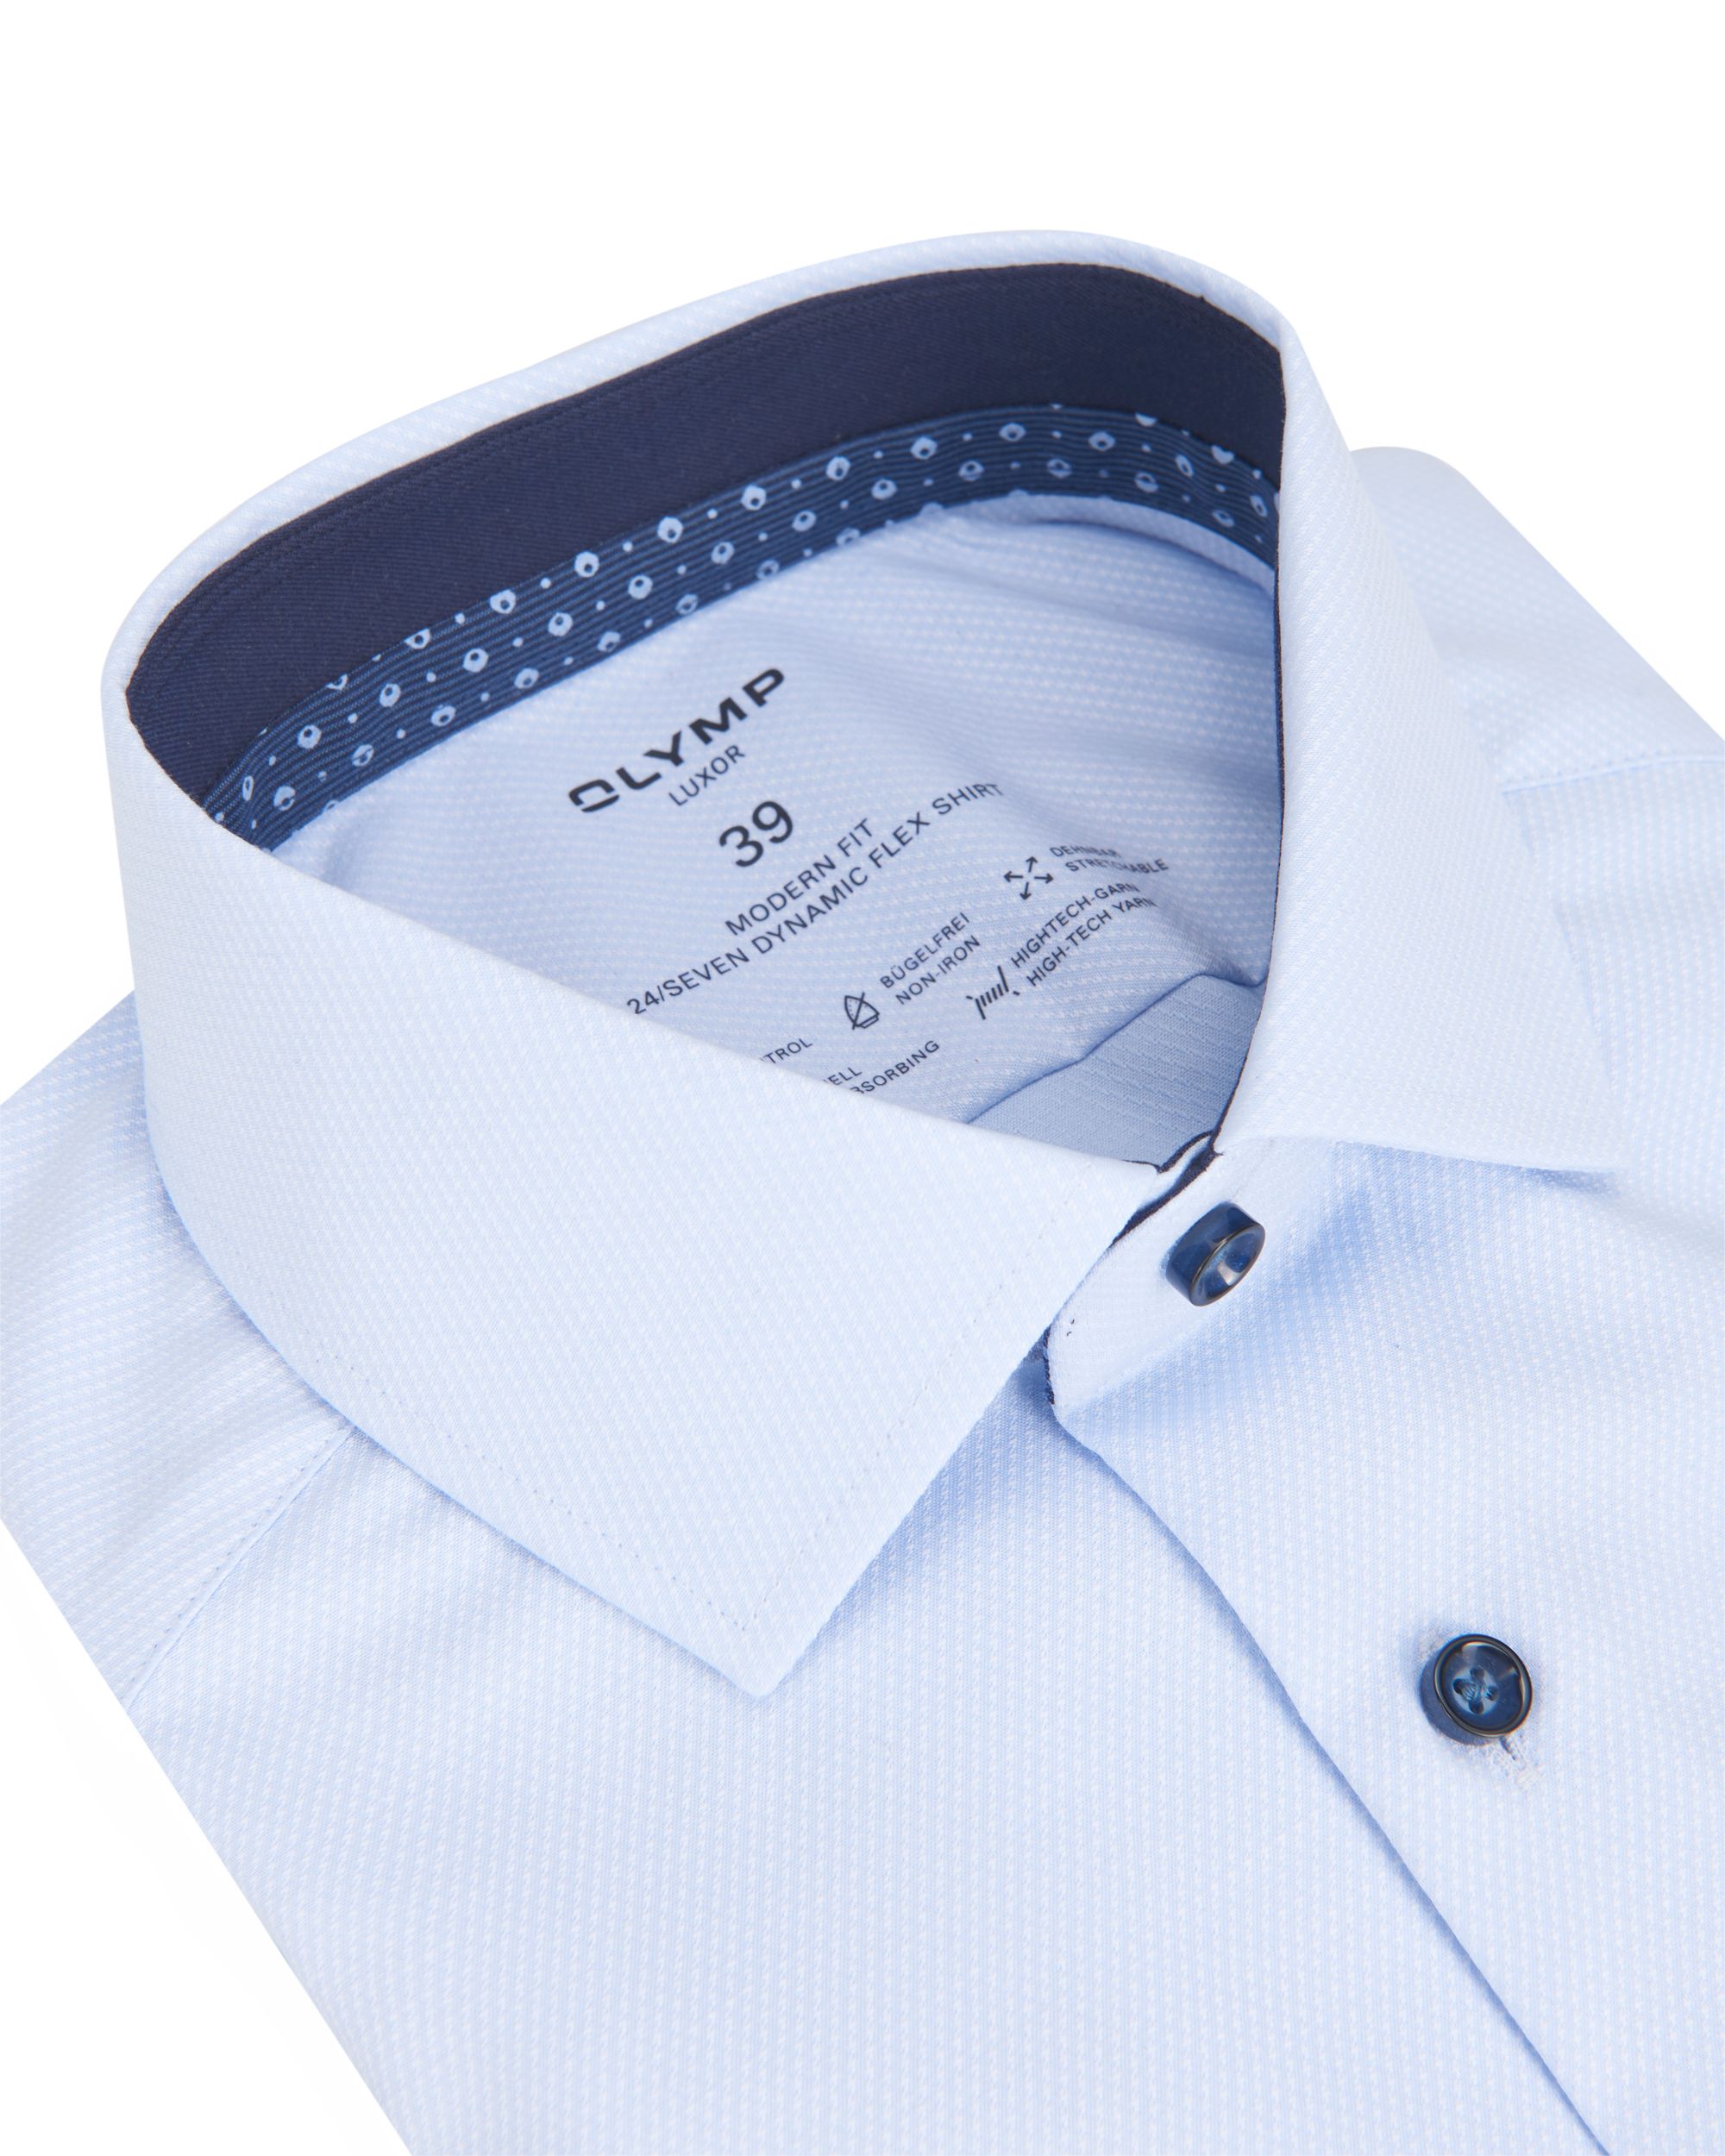 OLYMP Luxor 24/7 Modern fit Overhemd LM Blauw 088315-001-37